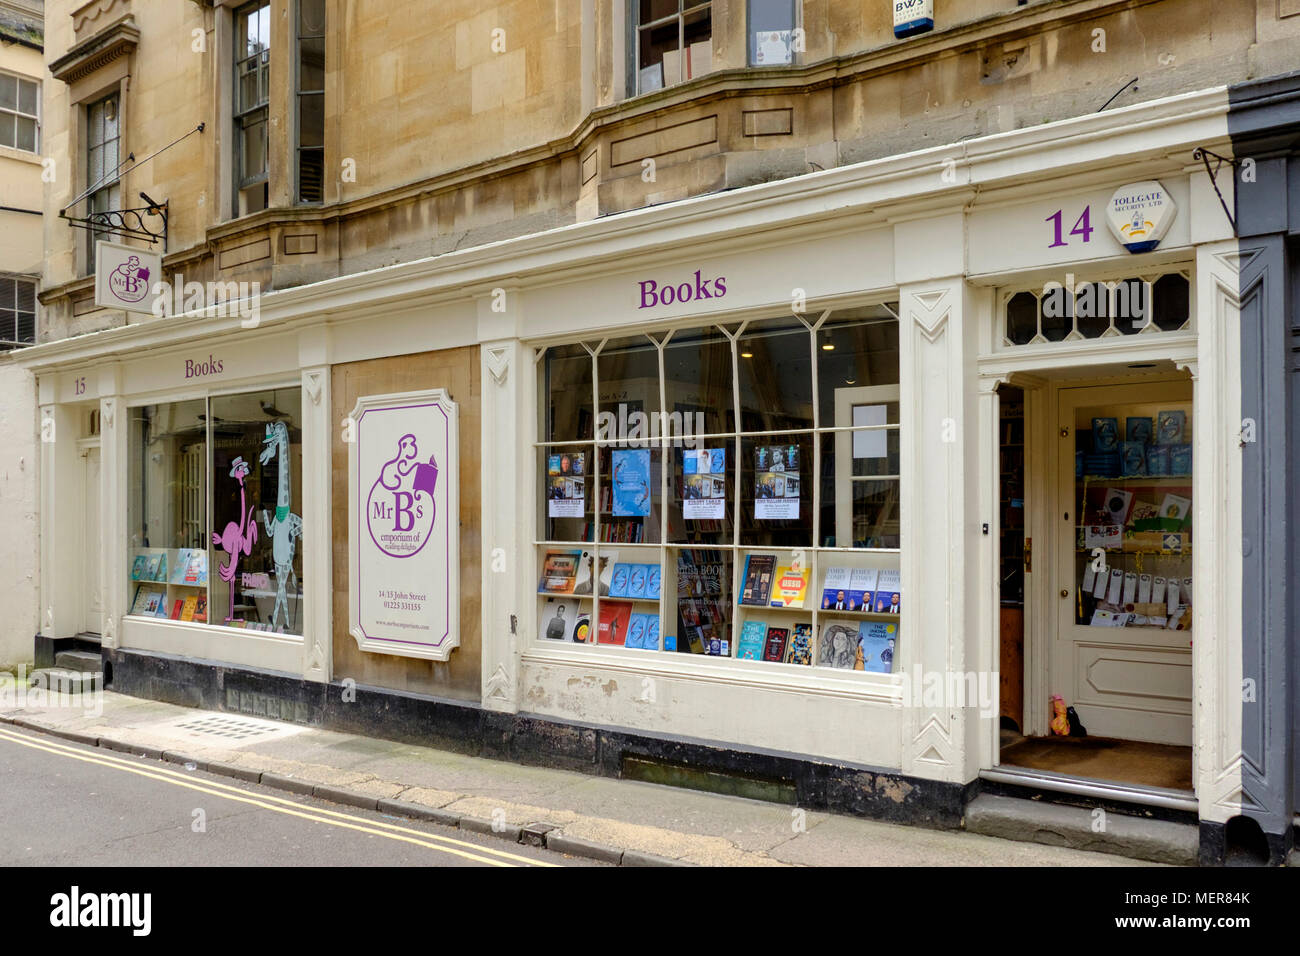 Mr B's bookshop in Bath somerset england UK Stock Photo